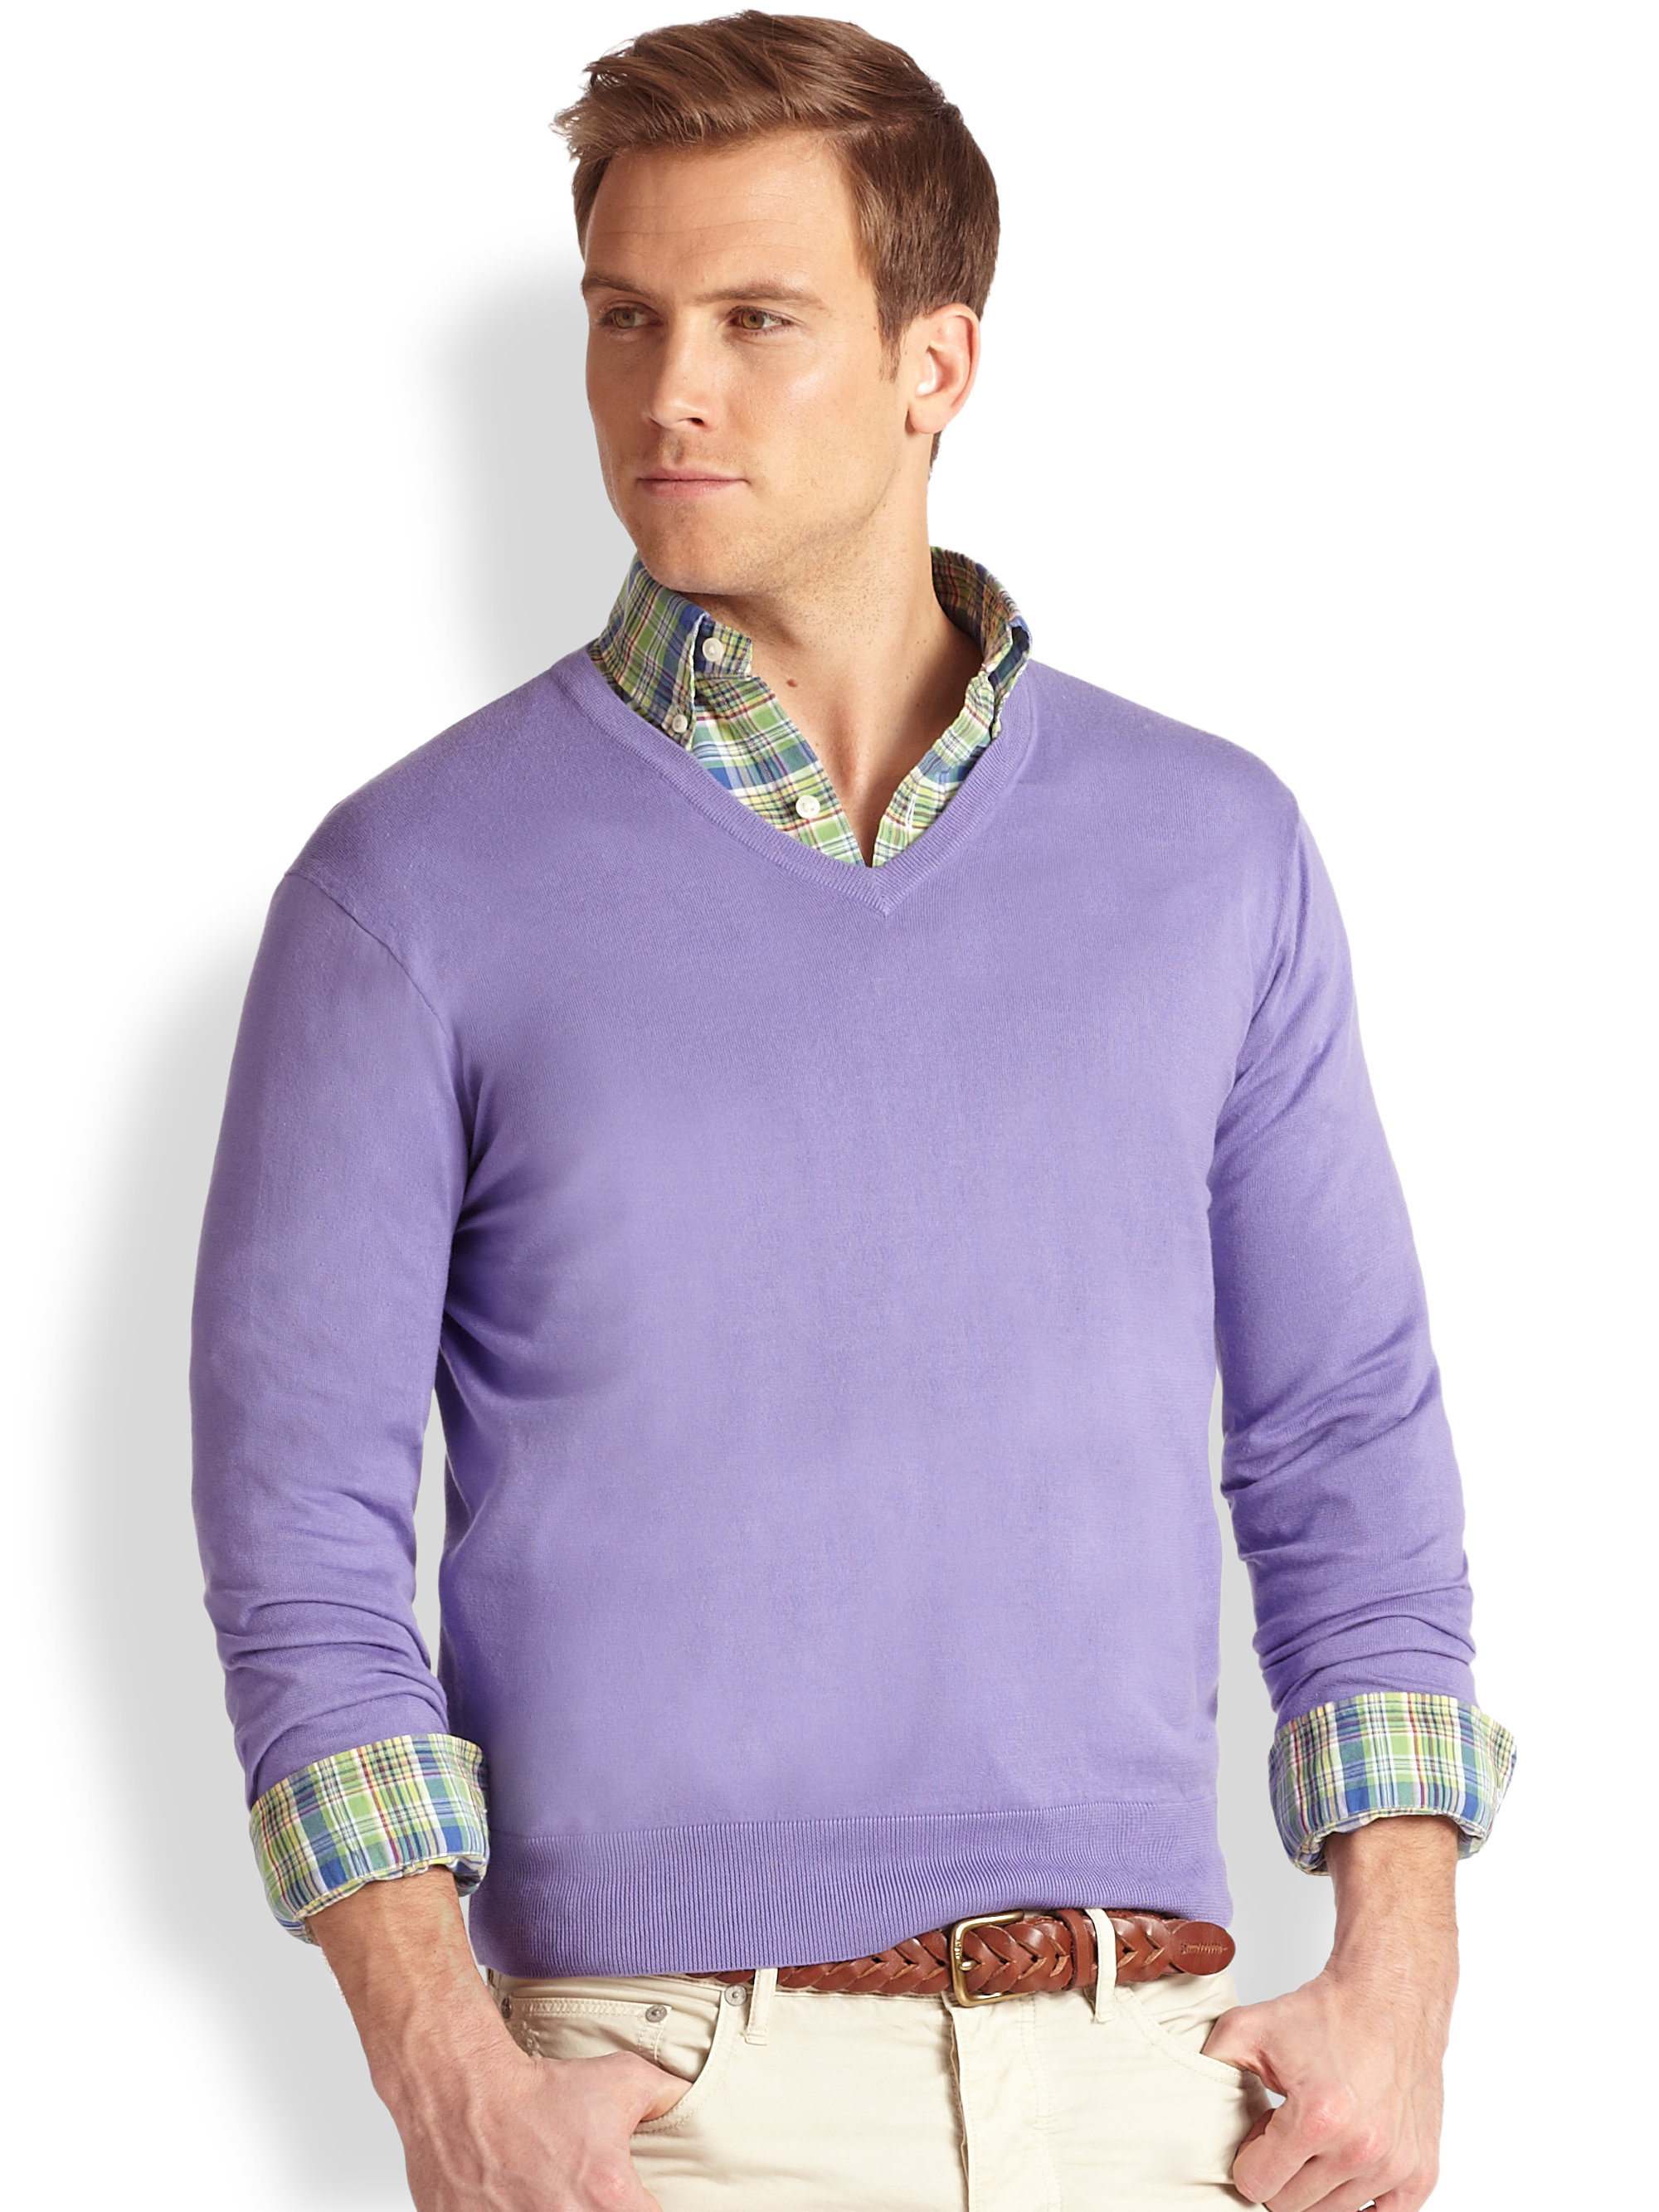 Polo Ralph Lauren Cotton-Cashmere V-Neck Sweater in Purple for Men - Lyst